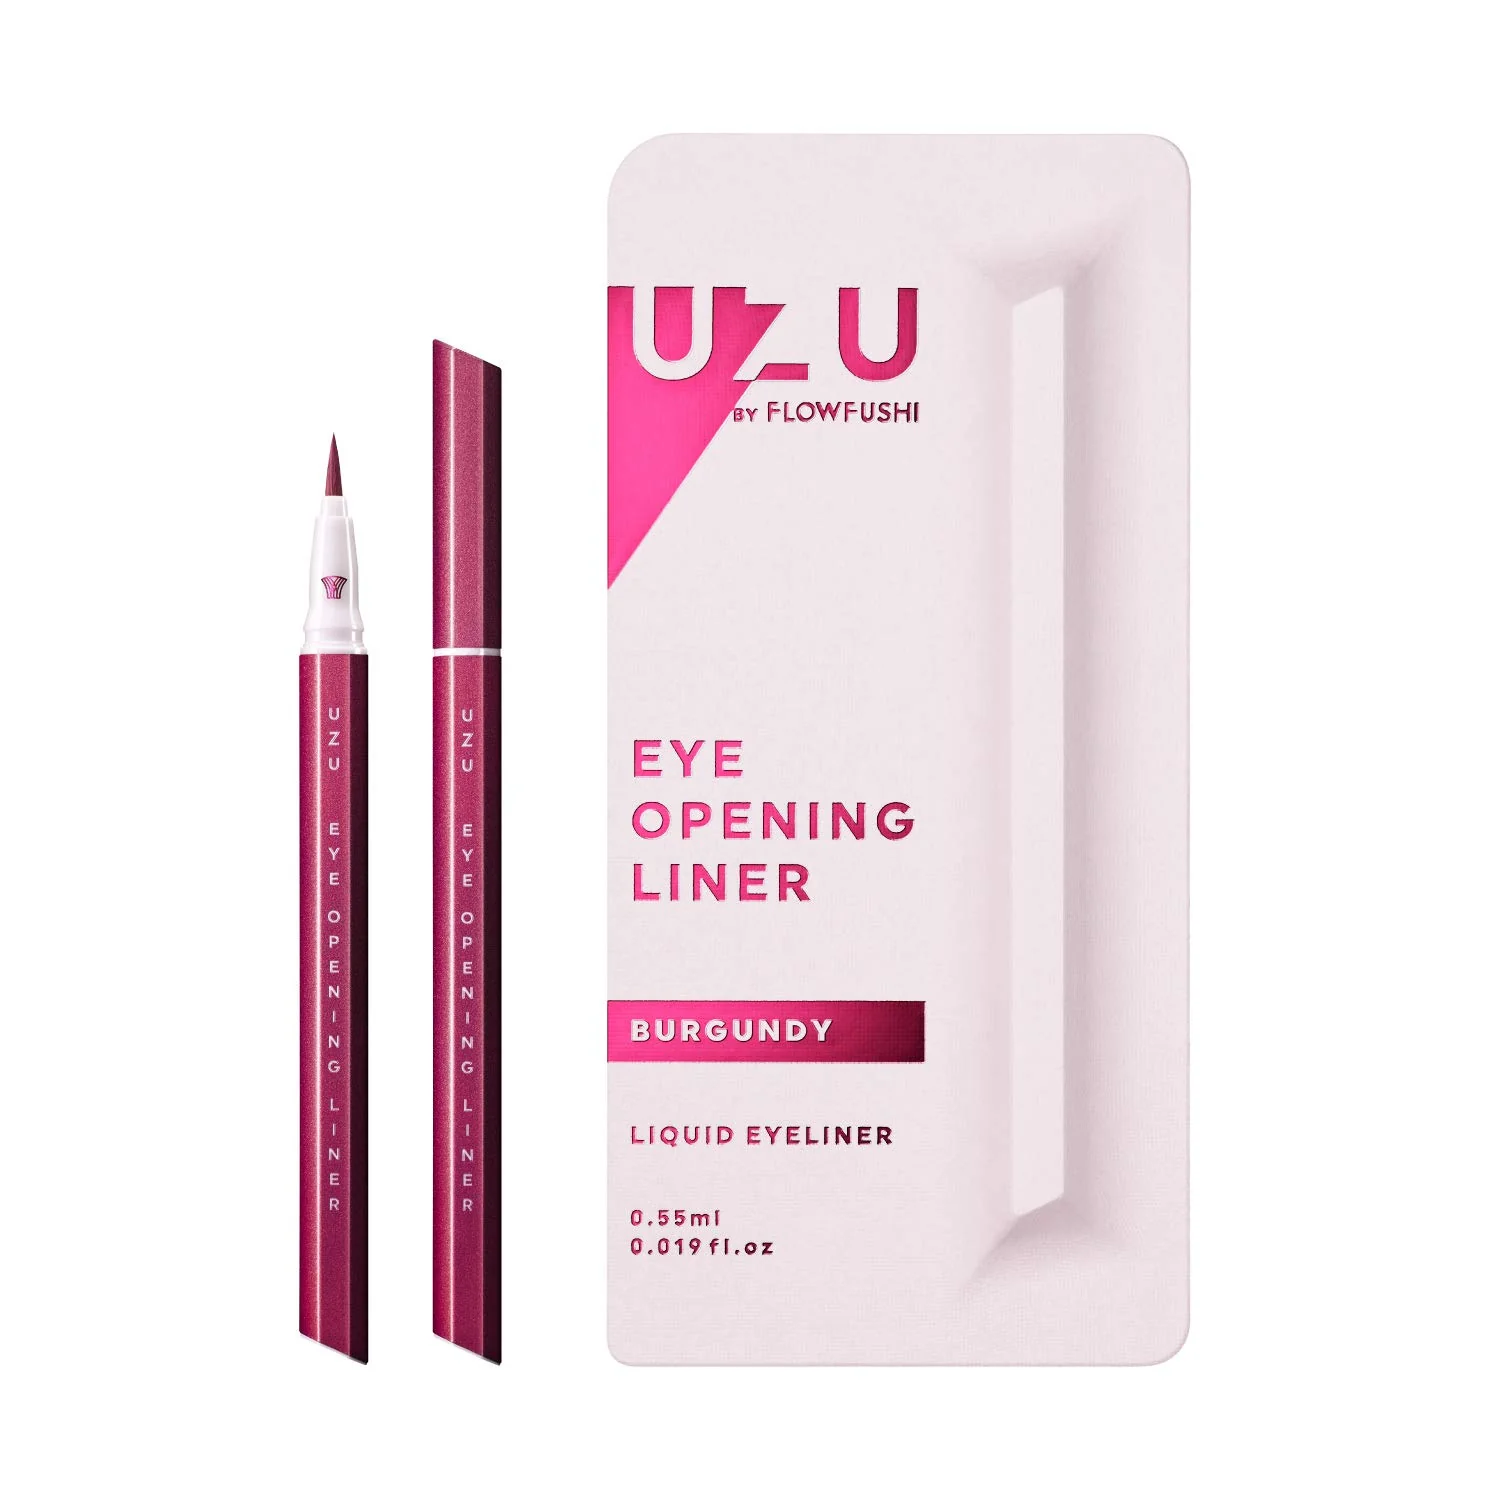 UZU By FLOWFUSHI Eye Opening Liner Liquid Eyeliner (Burgundy) 0.55ml